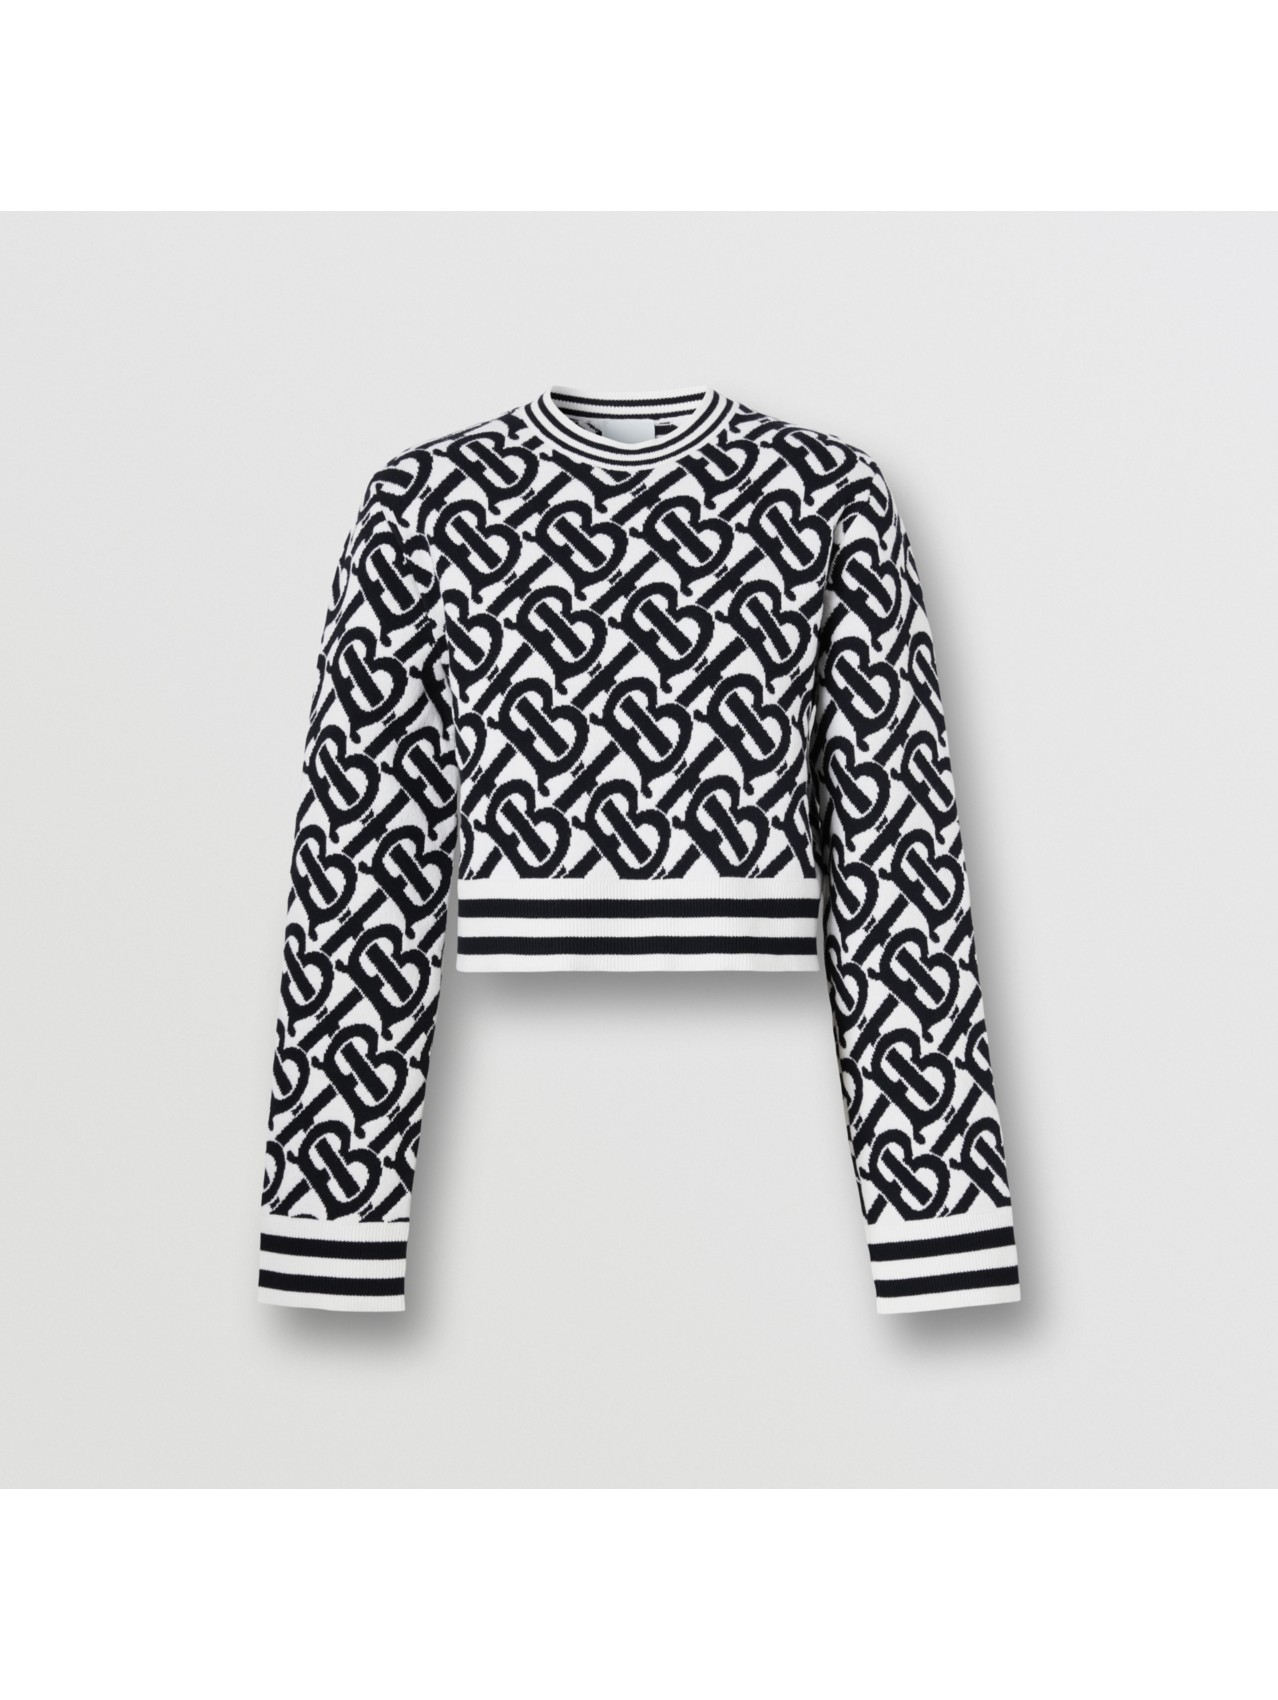 Women’s Designer Knitwear | Sweaters & Cardigans | Burberry® Official